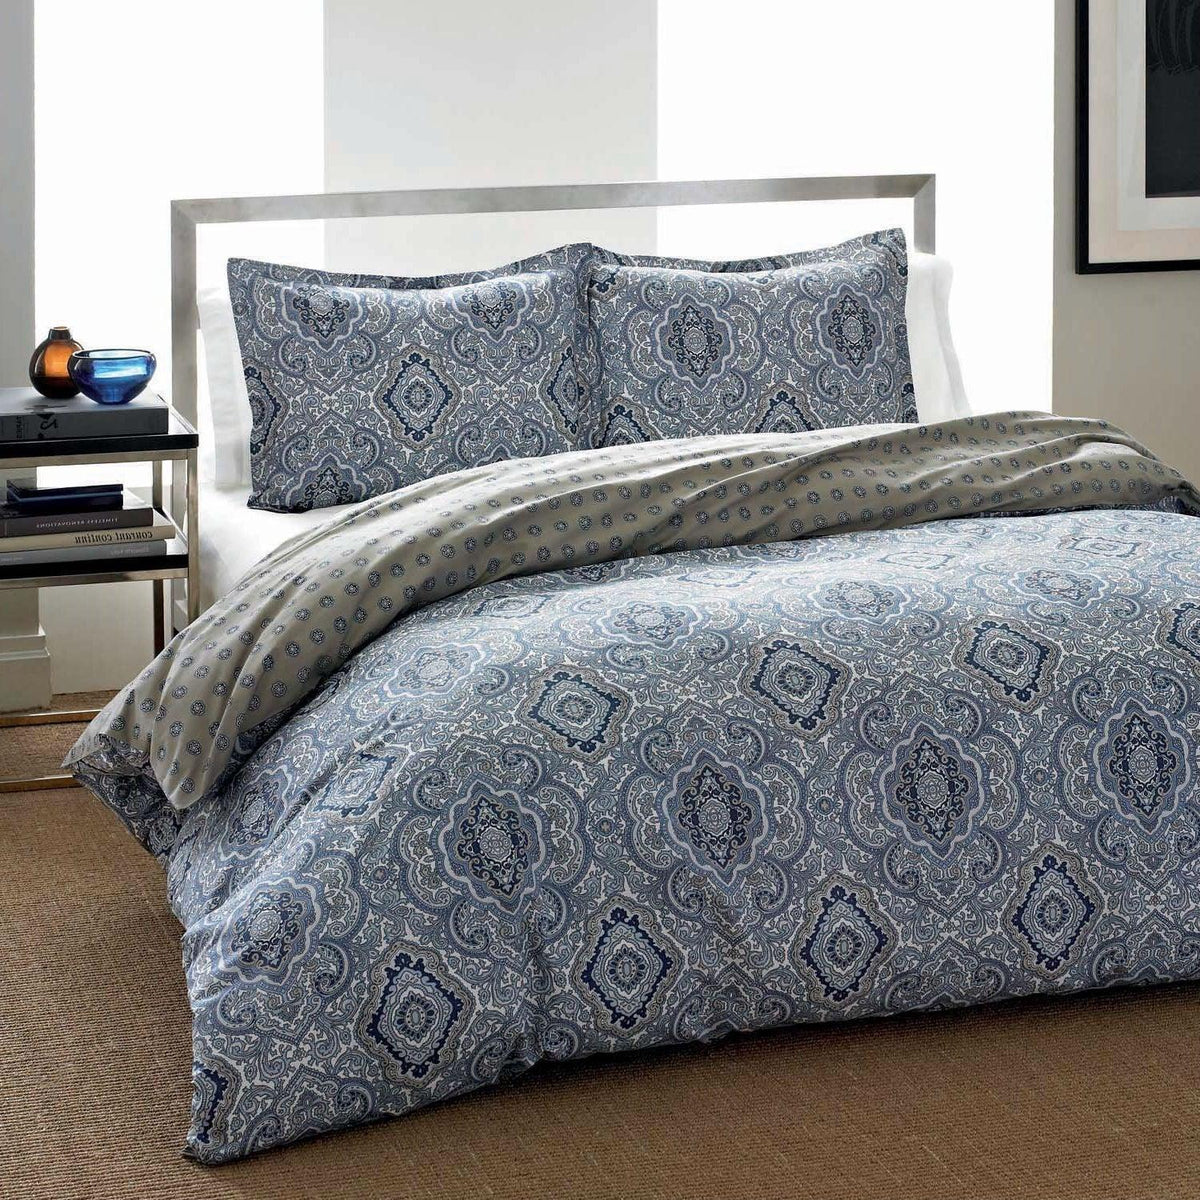 King 3-Piece Cotton Comforter Set with Blue Grey Damask Pattern